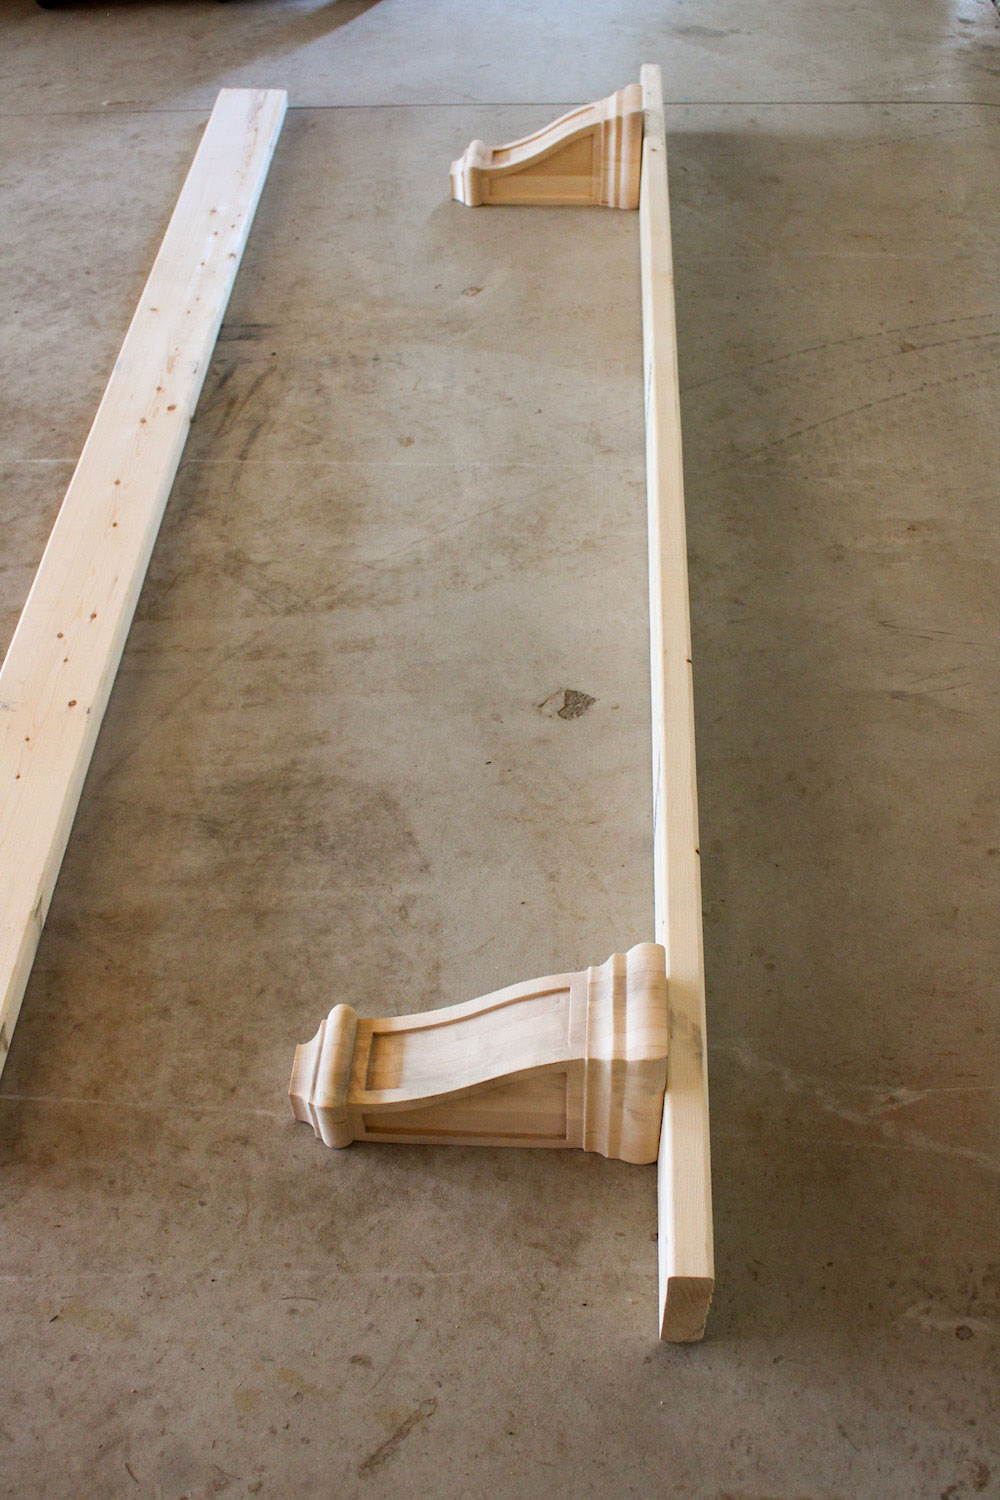 An assembled DIY large wood shelf on a concrete floor.